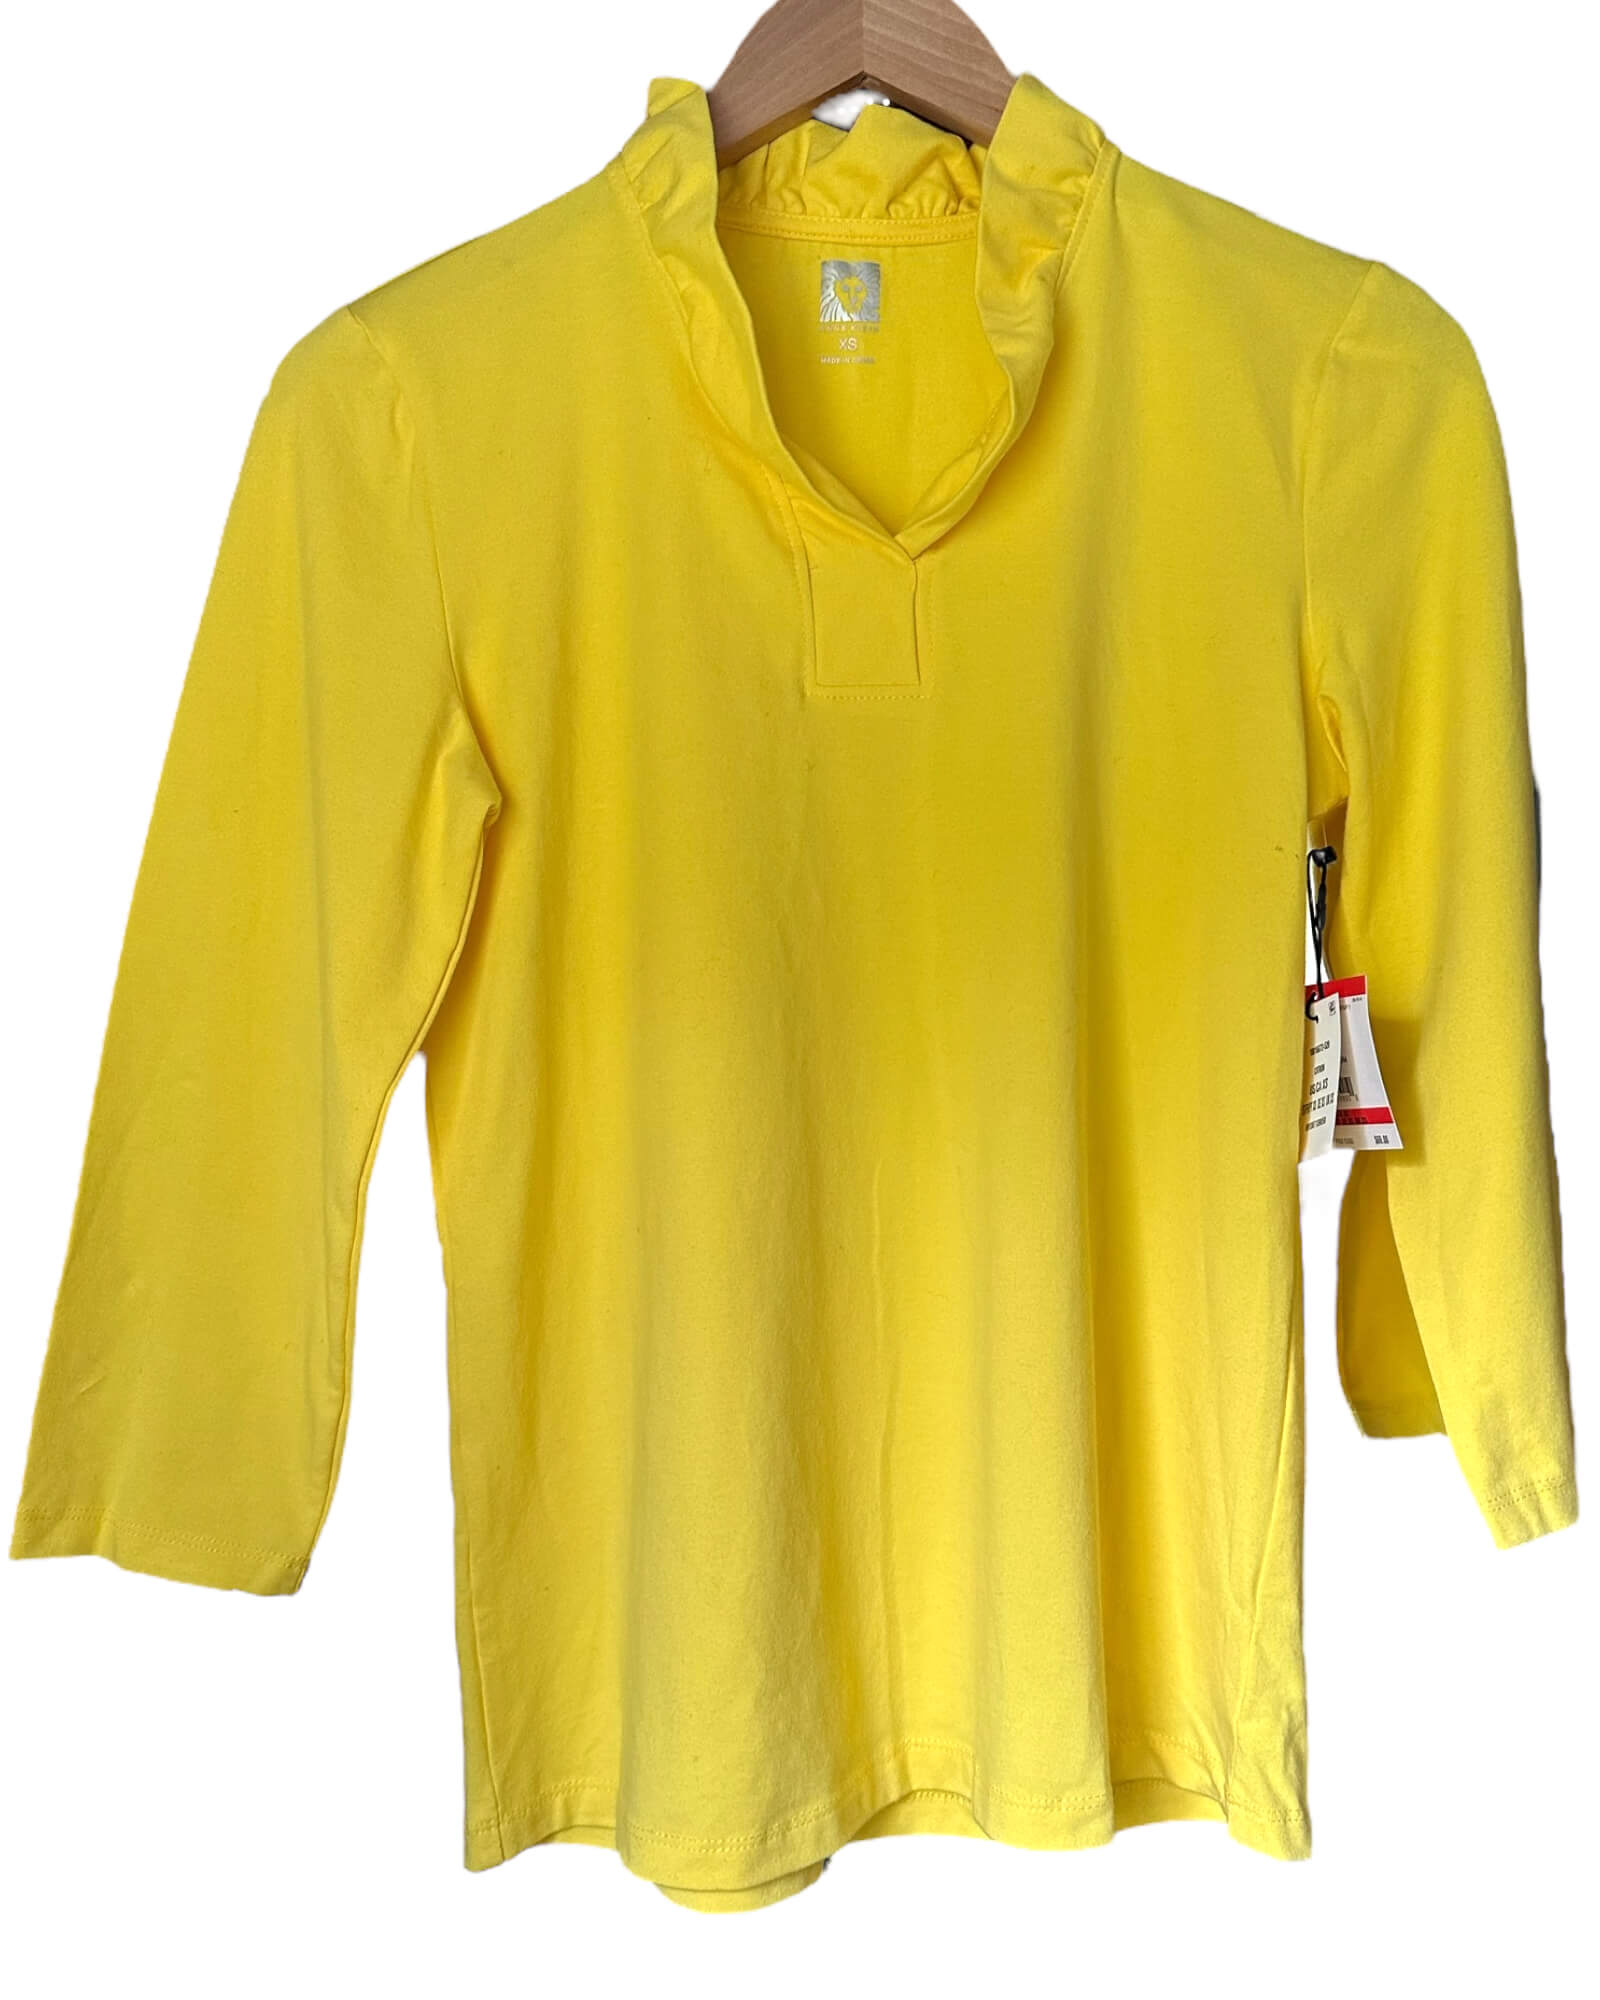 Cool Winter ANNE KLEIN yellow split ruffle knit top